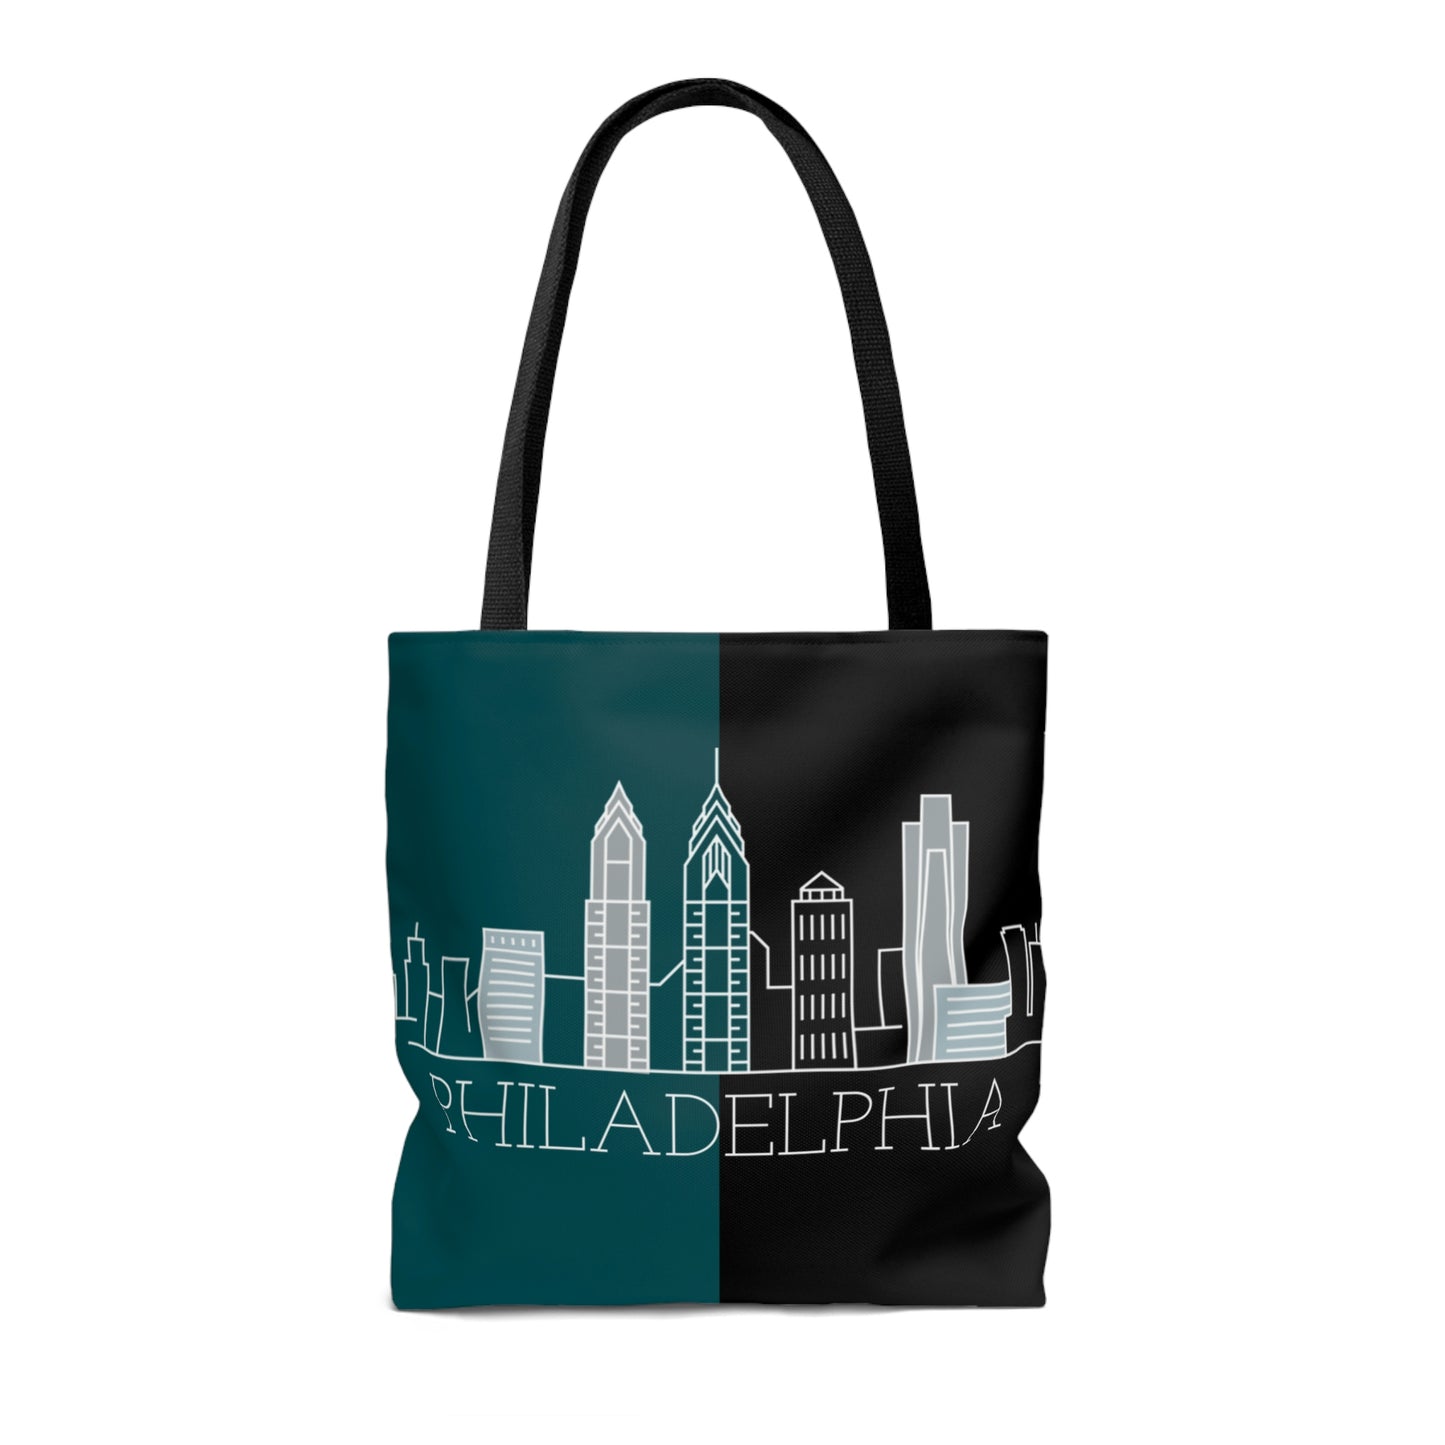 Philadelphia - City series  - Tote Bag